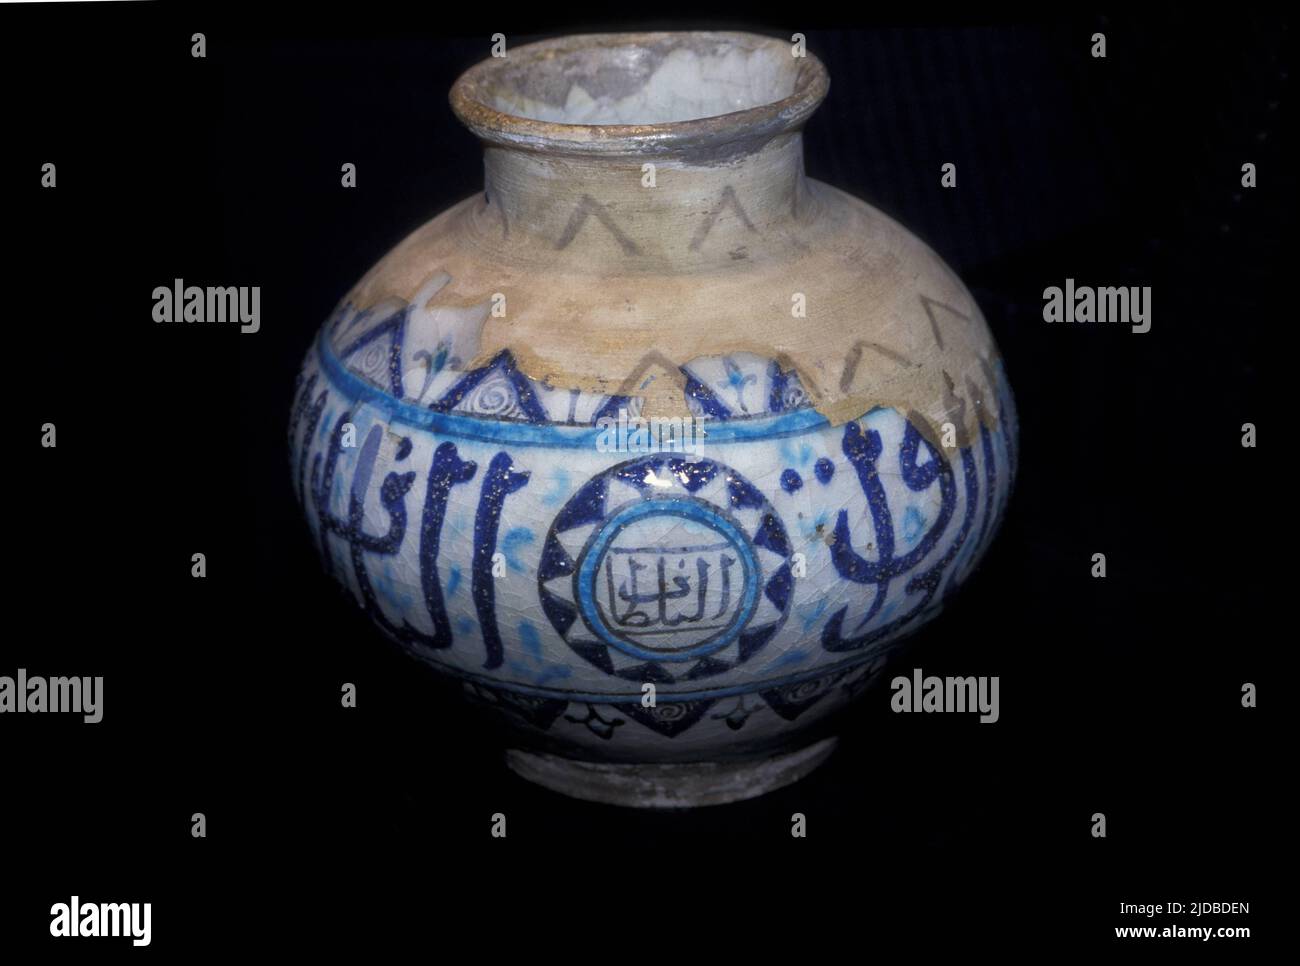 Earl example of decorative Islamic pottery Stock Photo